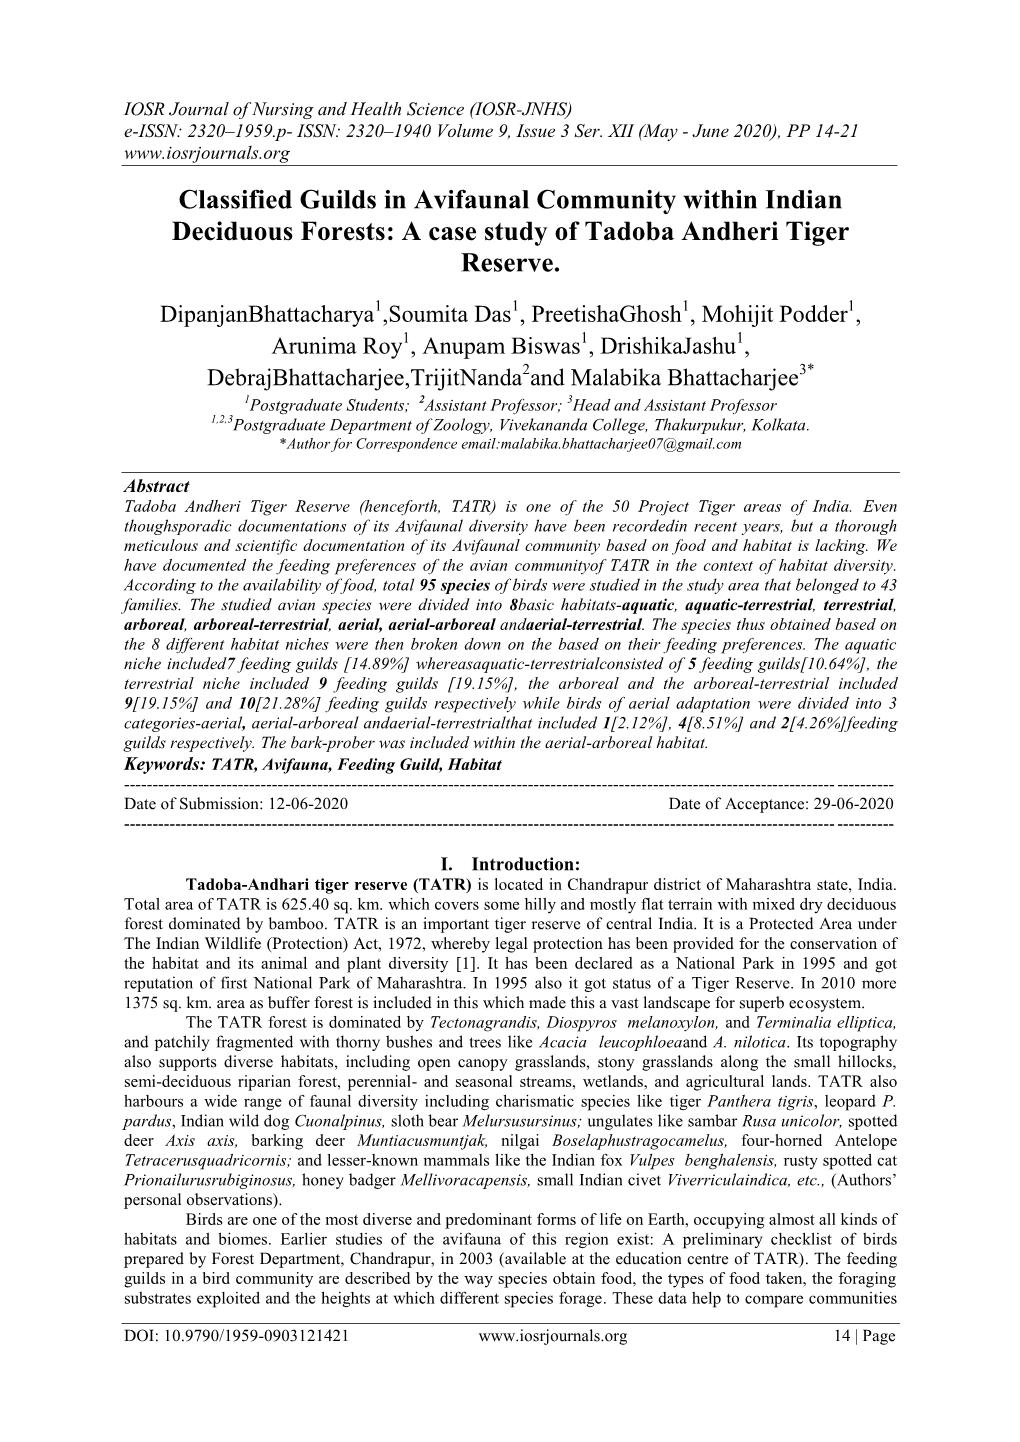 A Case Study of Tadoba Andheri Tiger Reserve